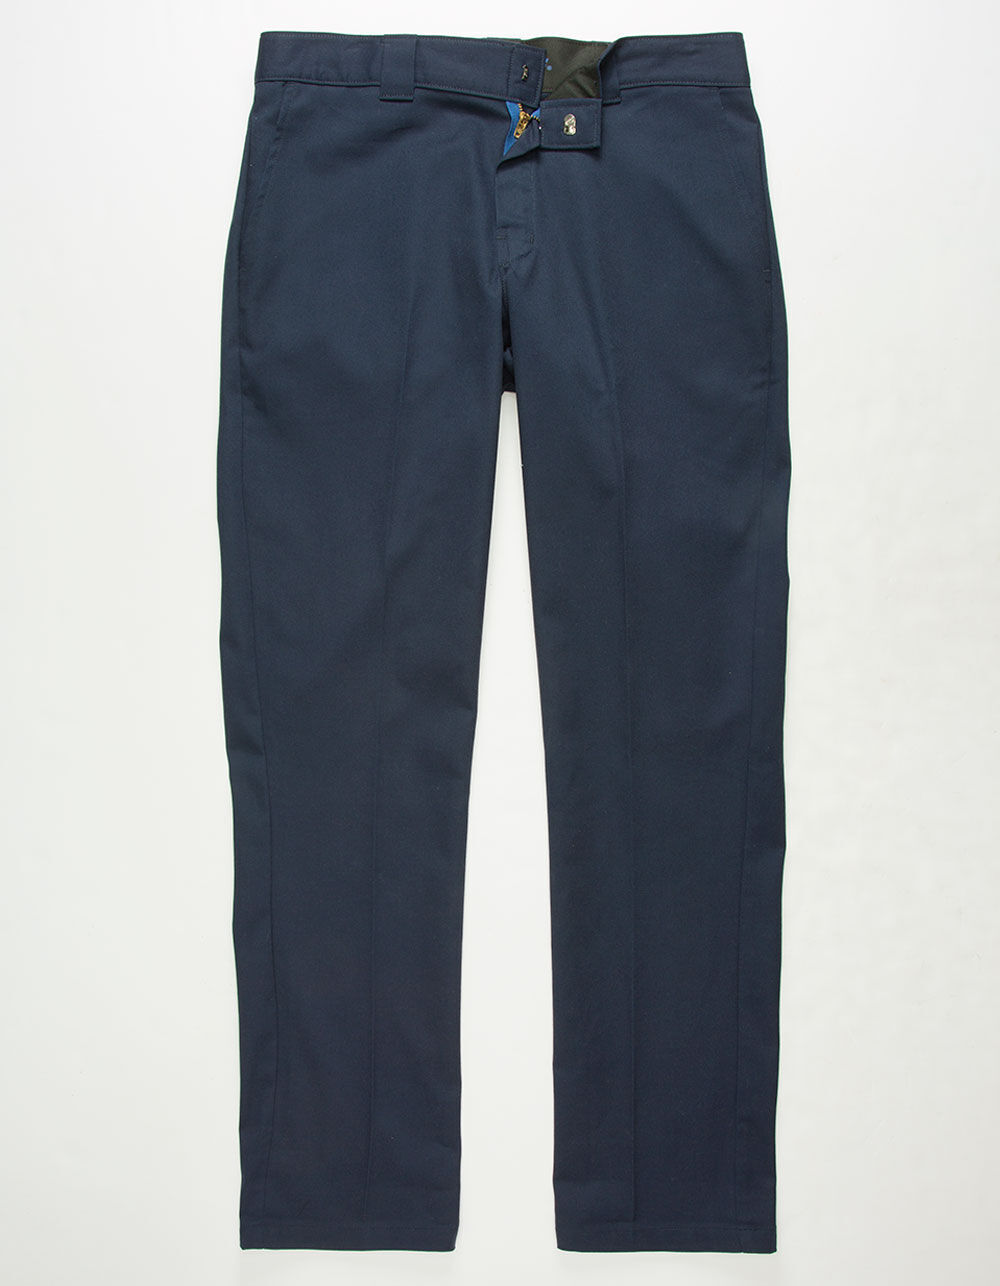 Dickies Slim Straight Flex Pants - Navy Blue  kunstform BMX Shop &  Mailorder - worldwide shipping